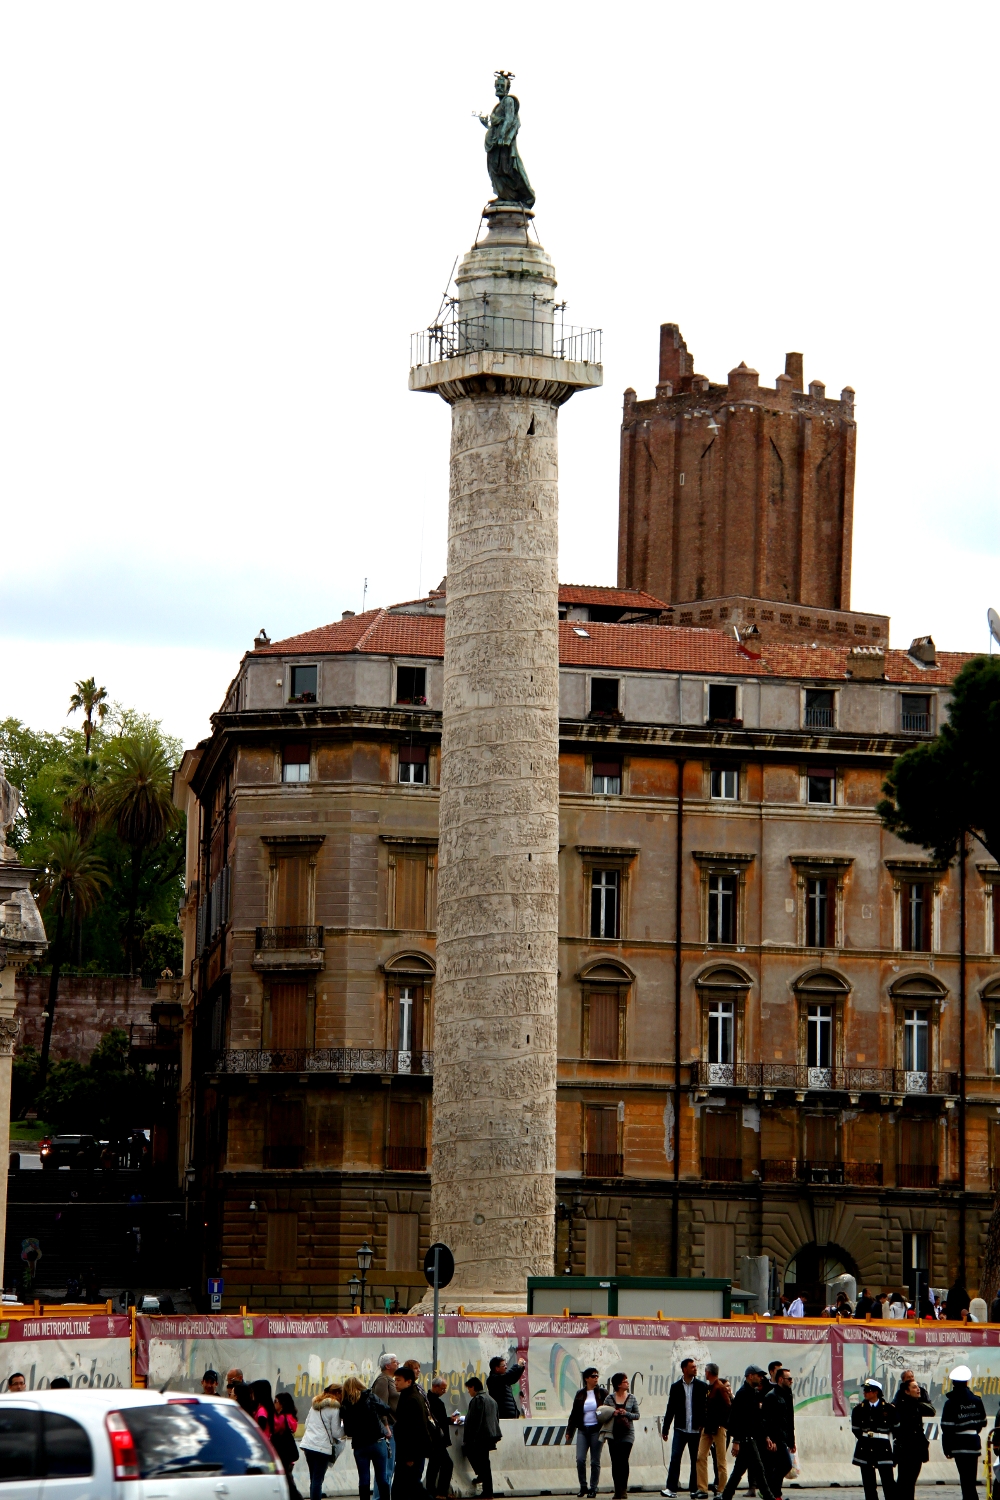 Trajans Column | Trajans column, Ancient rome, Roman empire